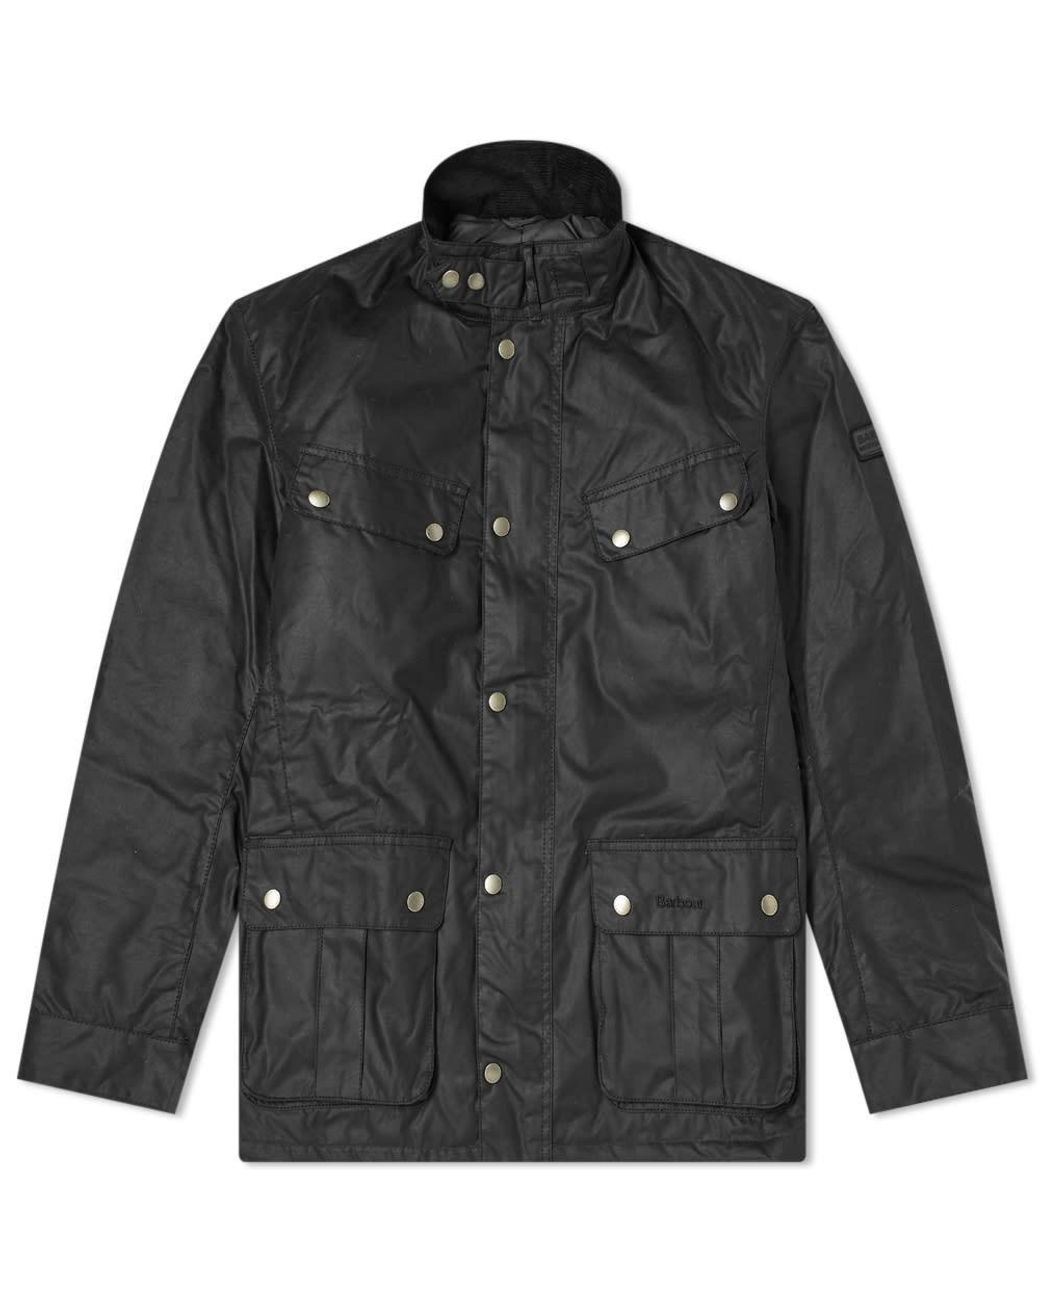 Barbour Cotton International Duke Wax Jacket in Black for Men - Save 40 ...